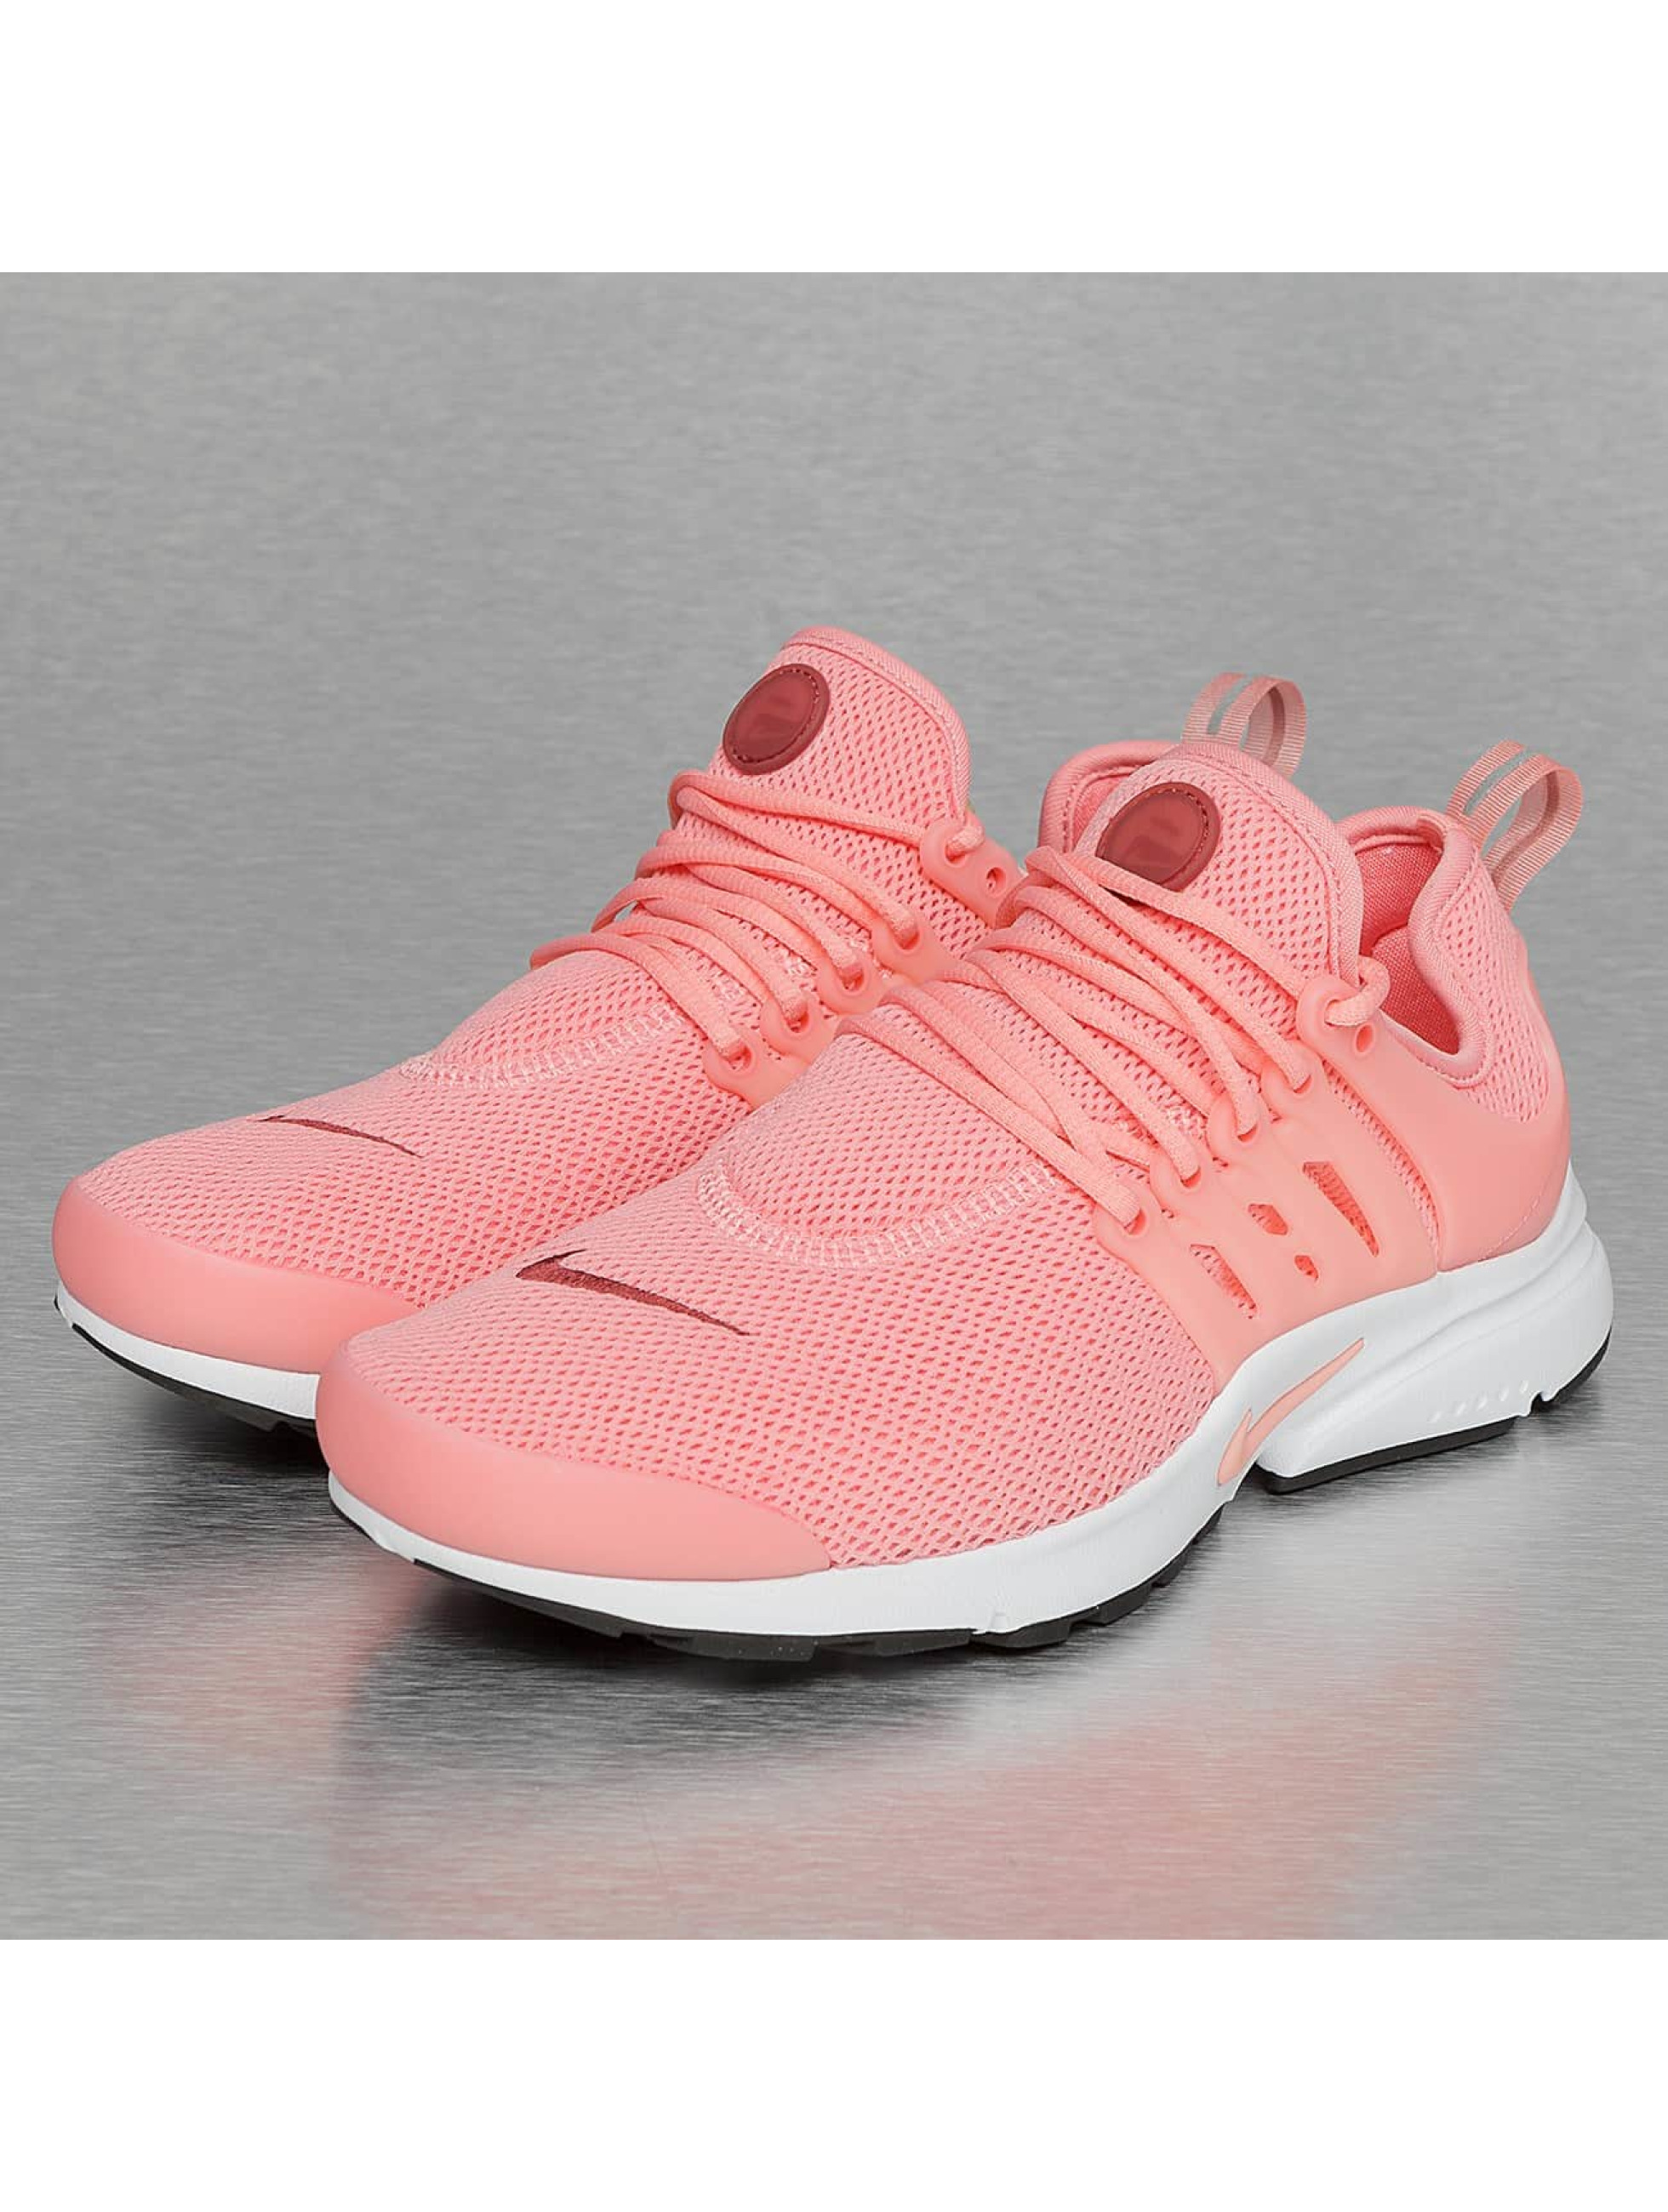 Nike Chaussures / Baskets Women's Air Presto en rose